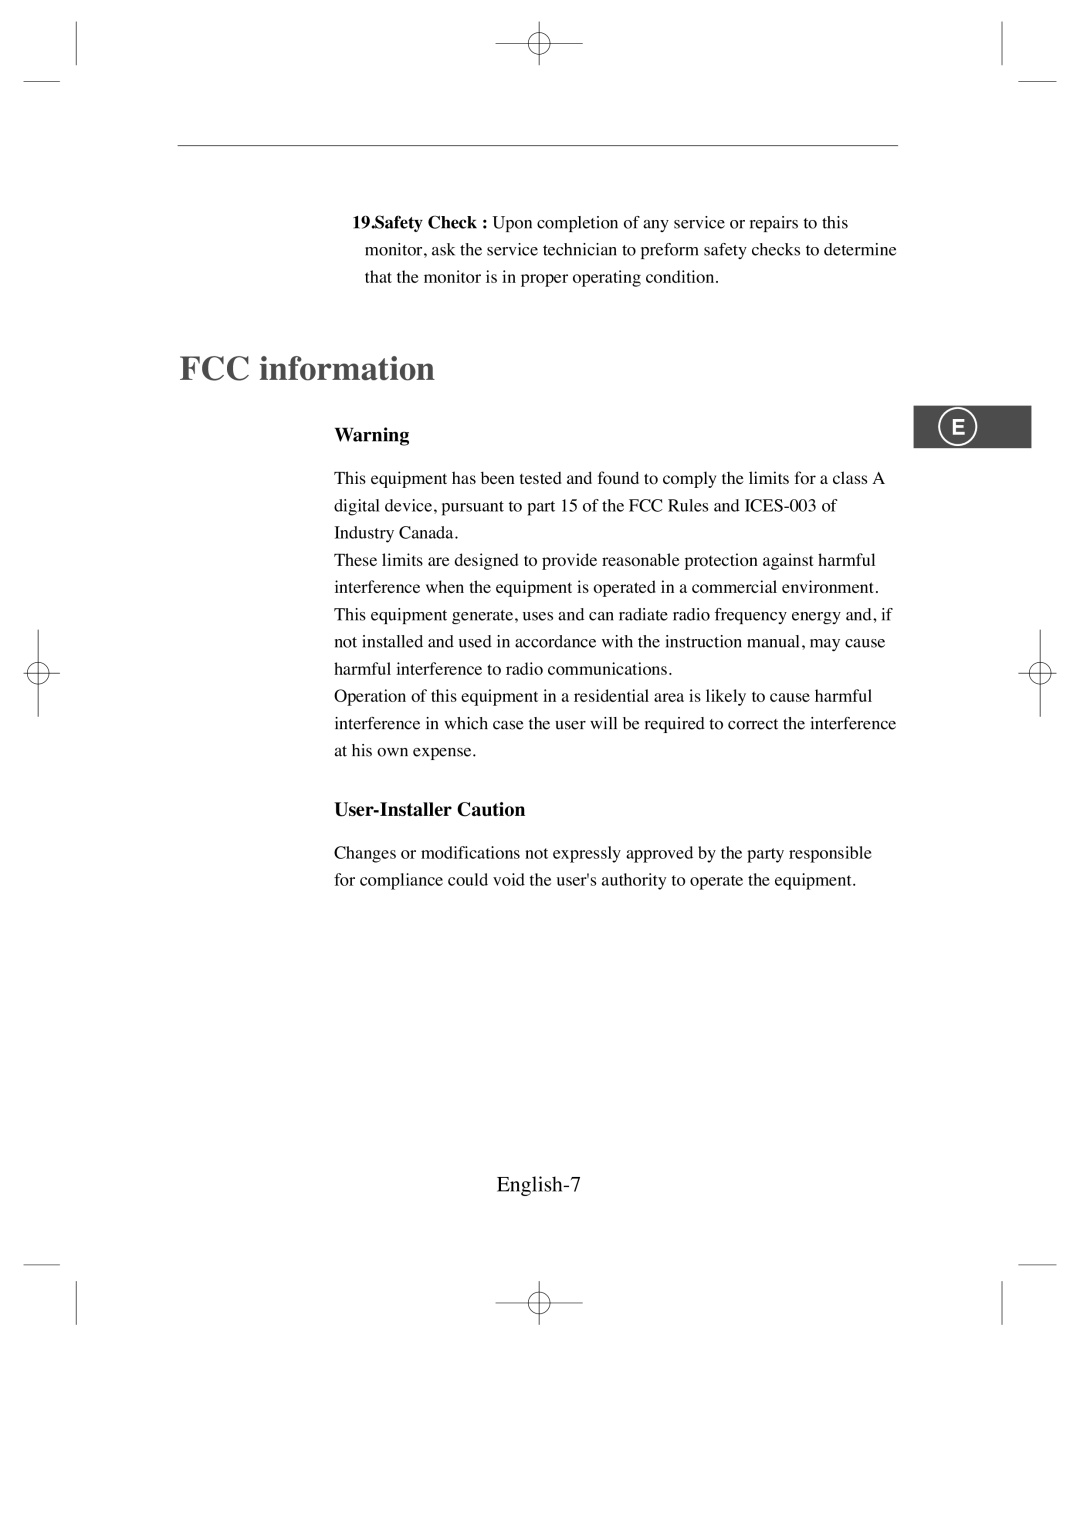 Samsung SMC-213, SMC-214 U manual FCC information, English-7, User-Installer Caution 